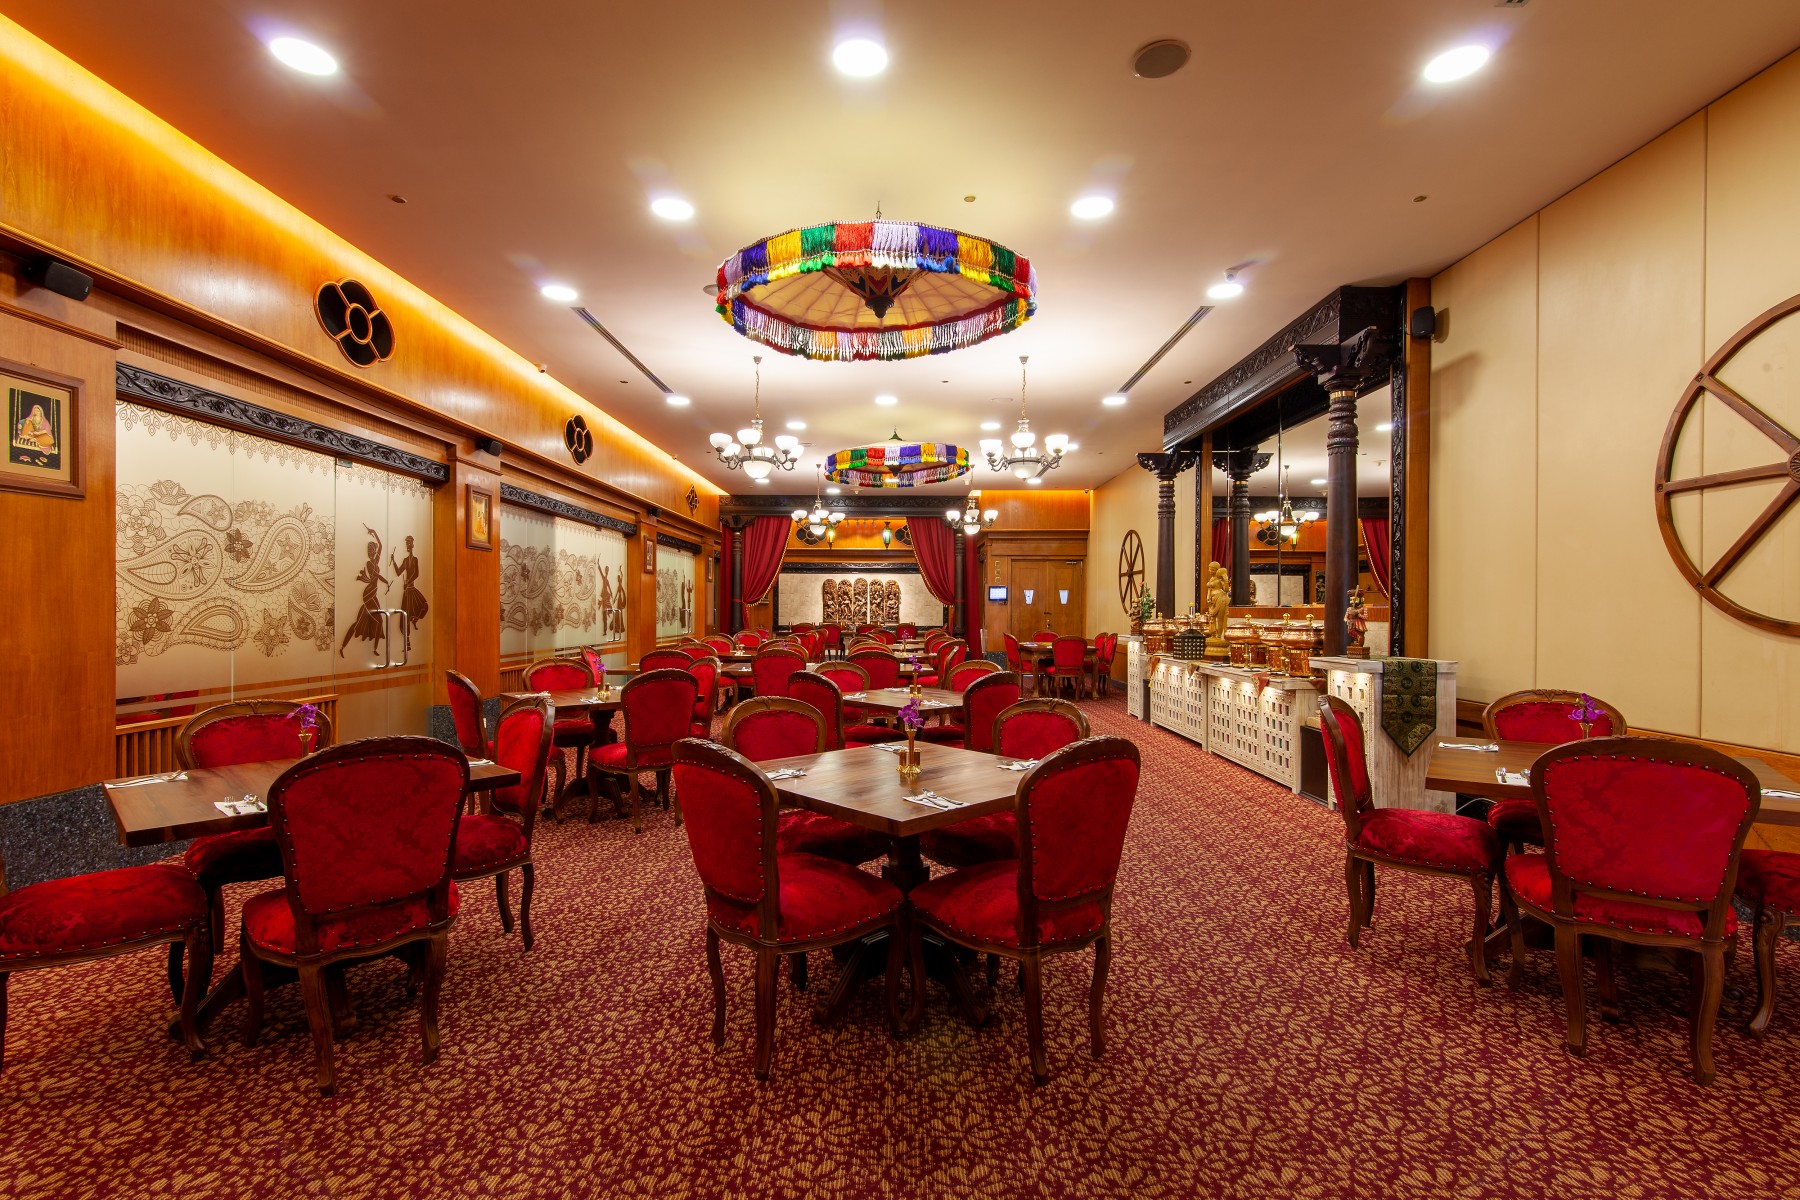 Restaurants & Bars - Mantra Restaurant Penang Hotel - Bayview Hotel